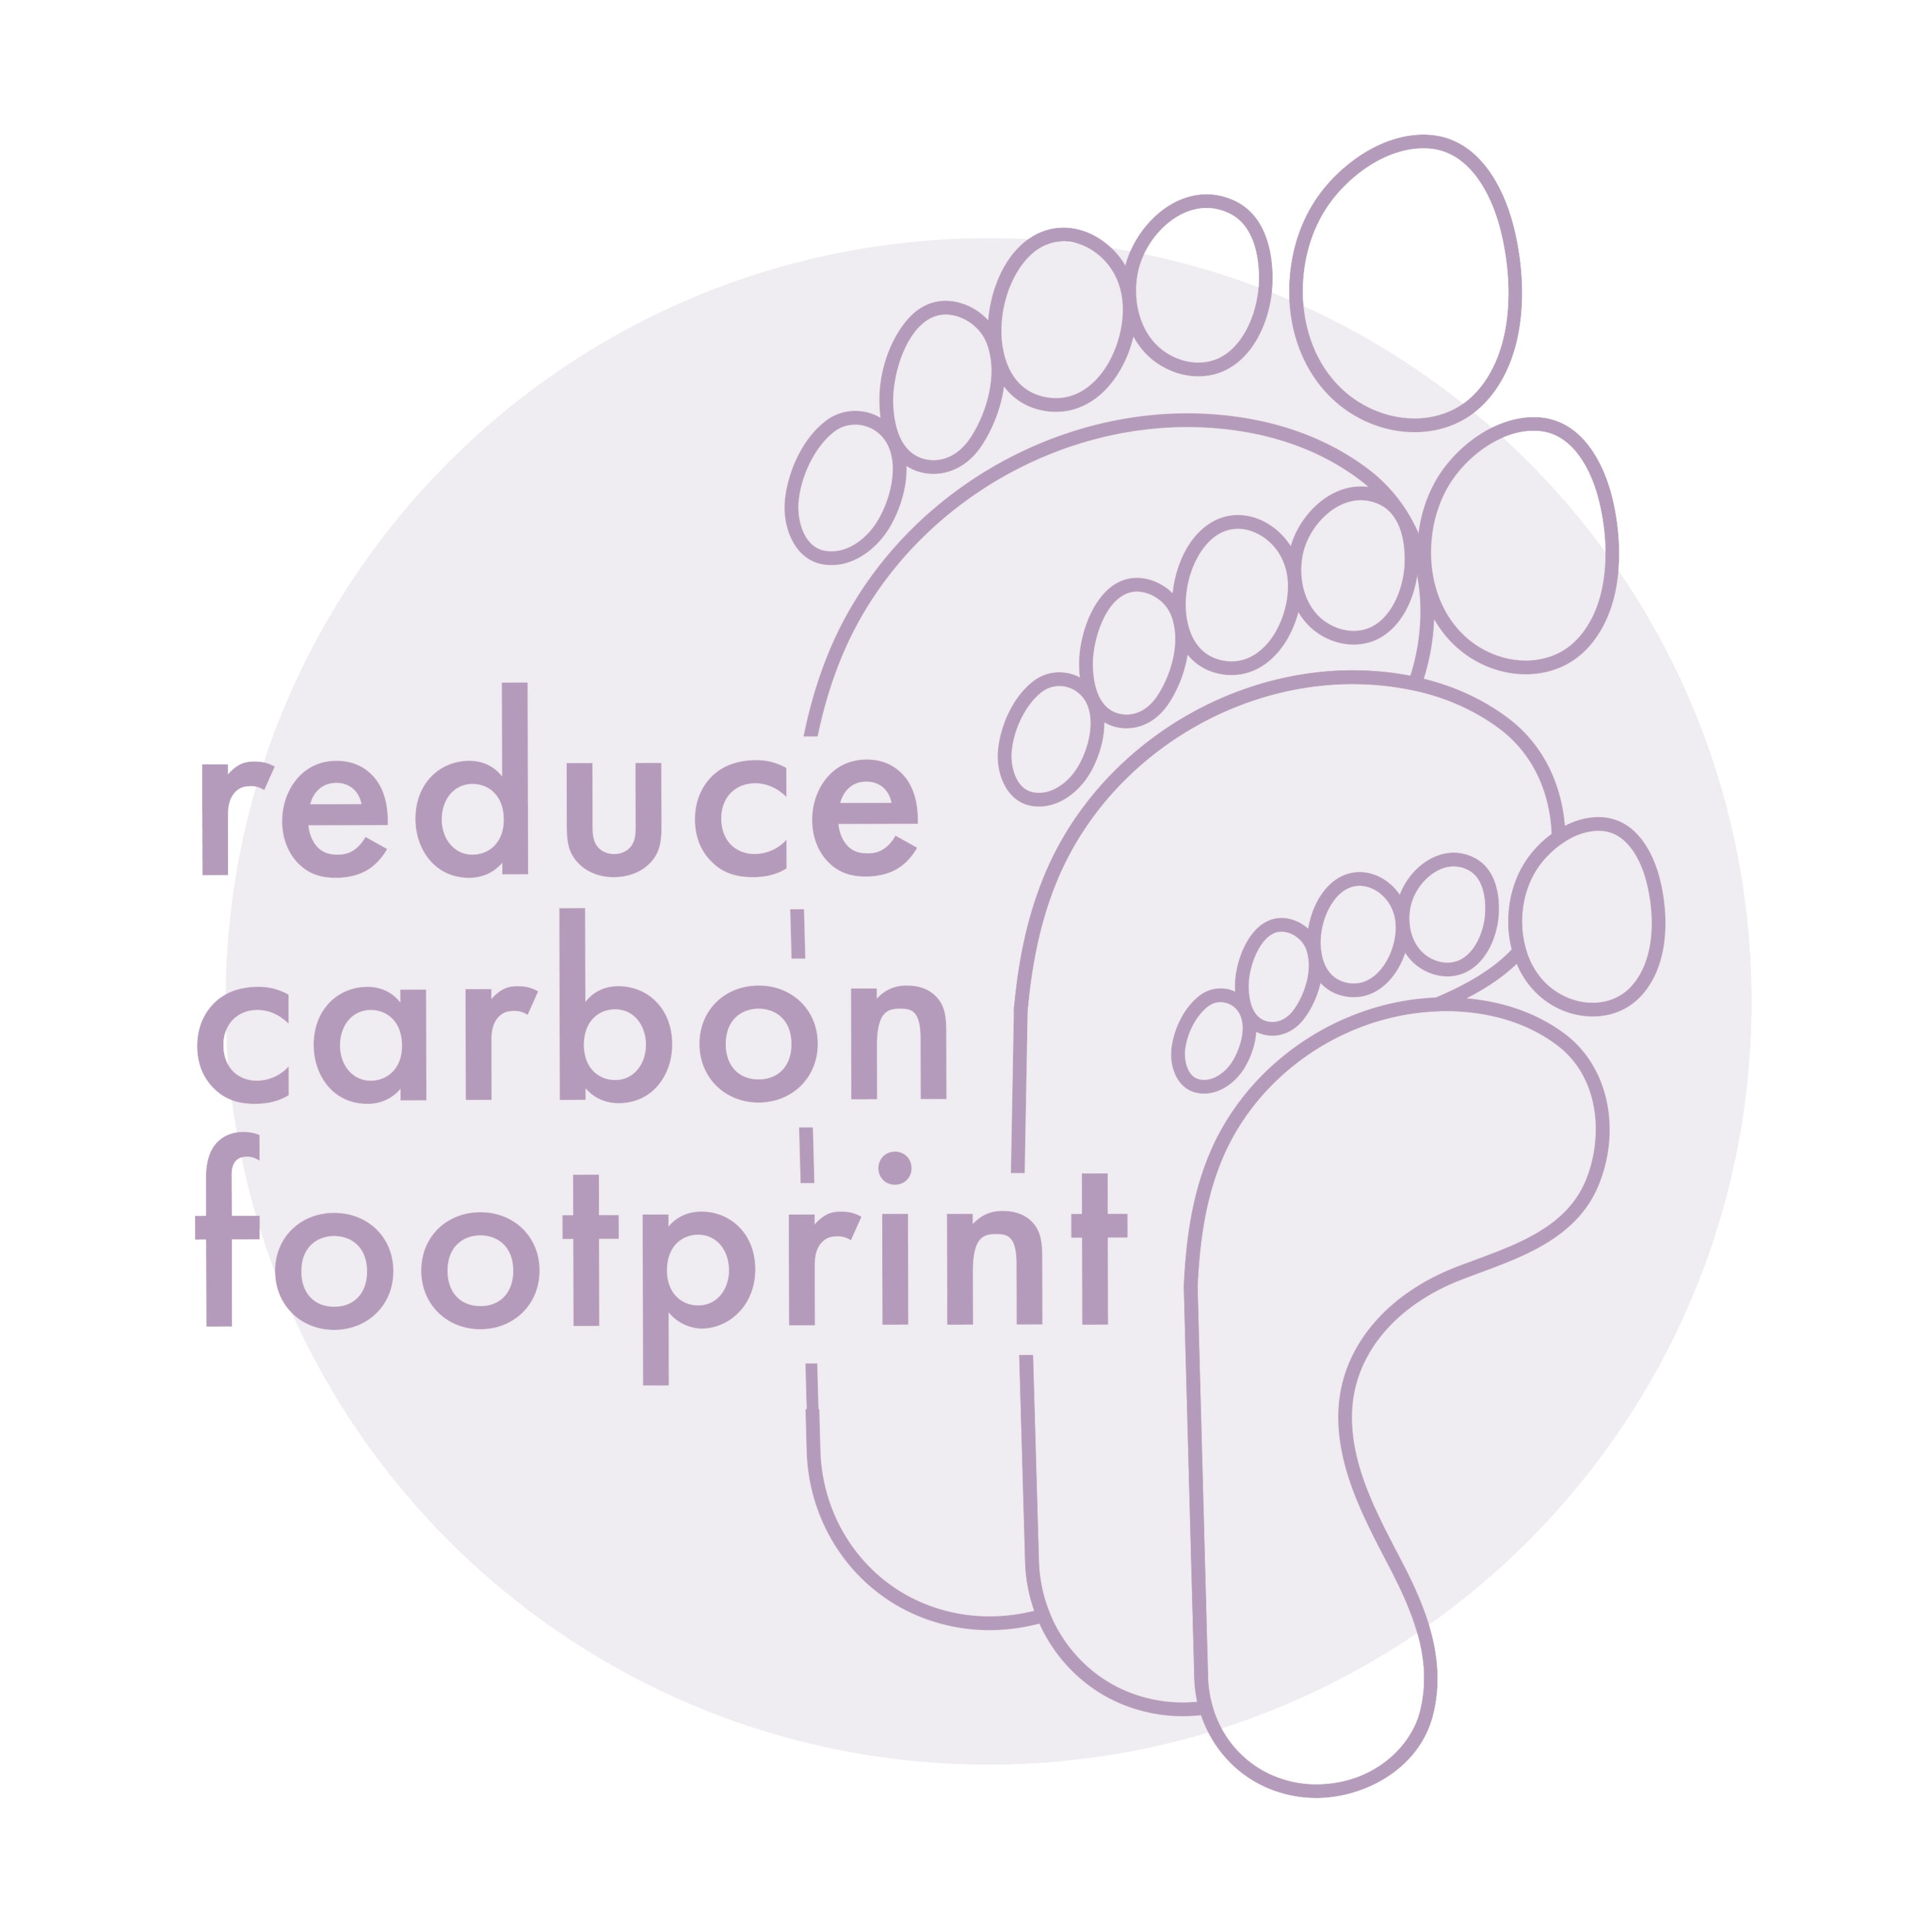 illustrated footprints carbon image